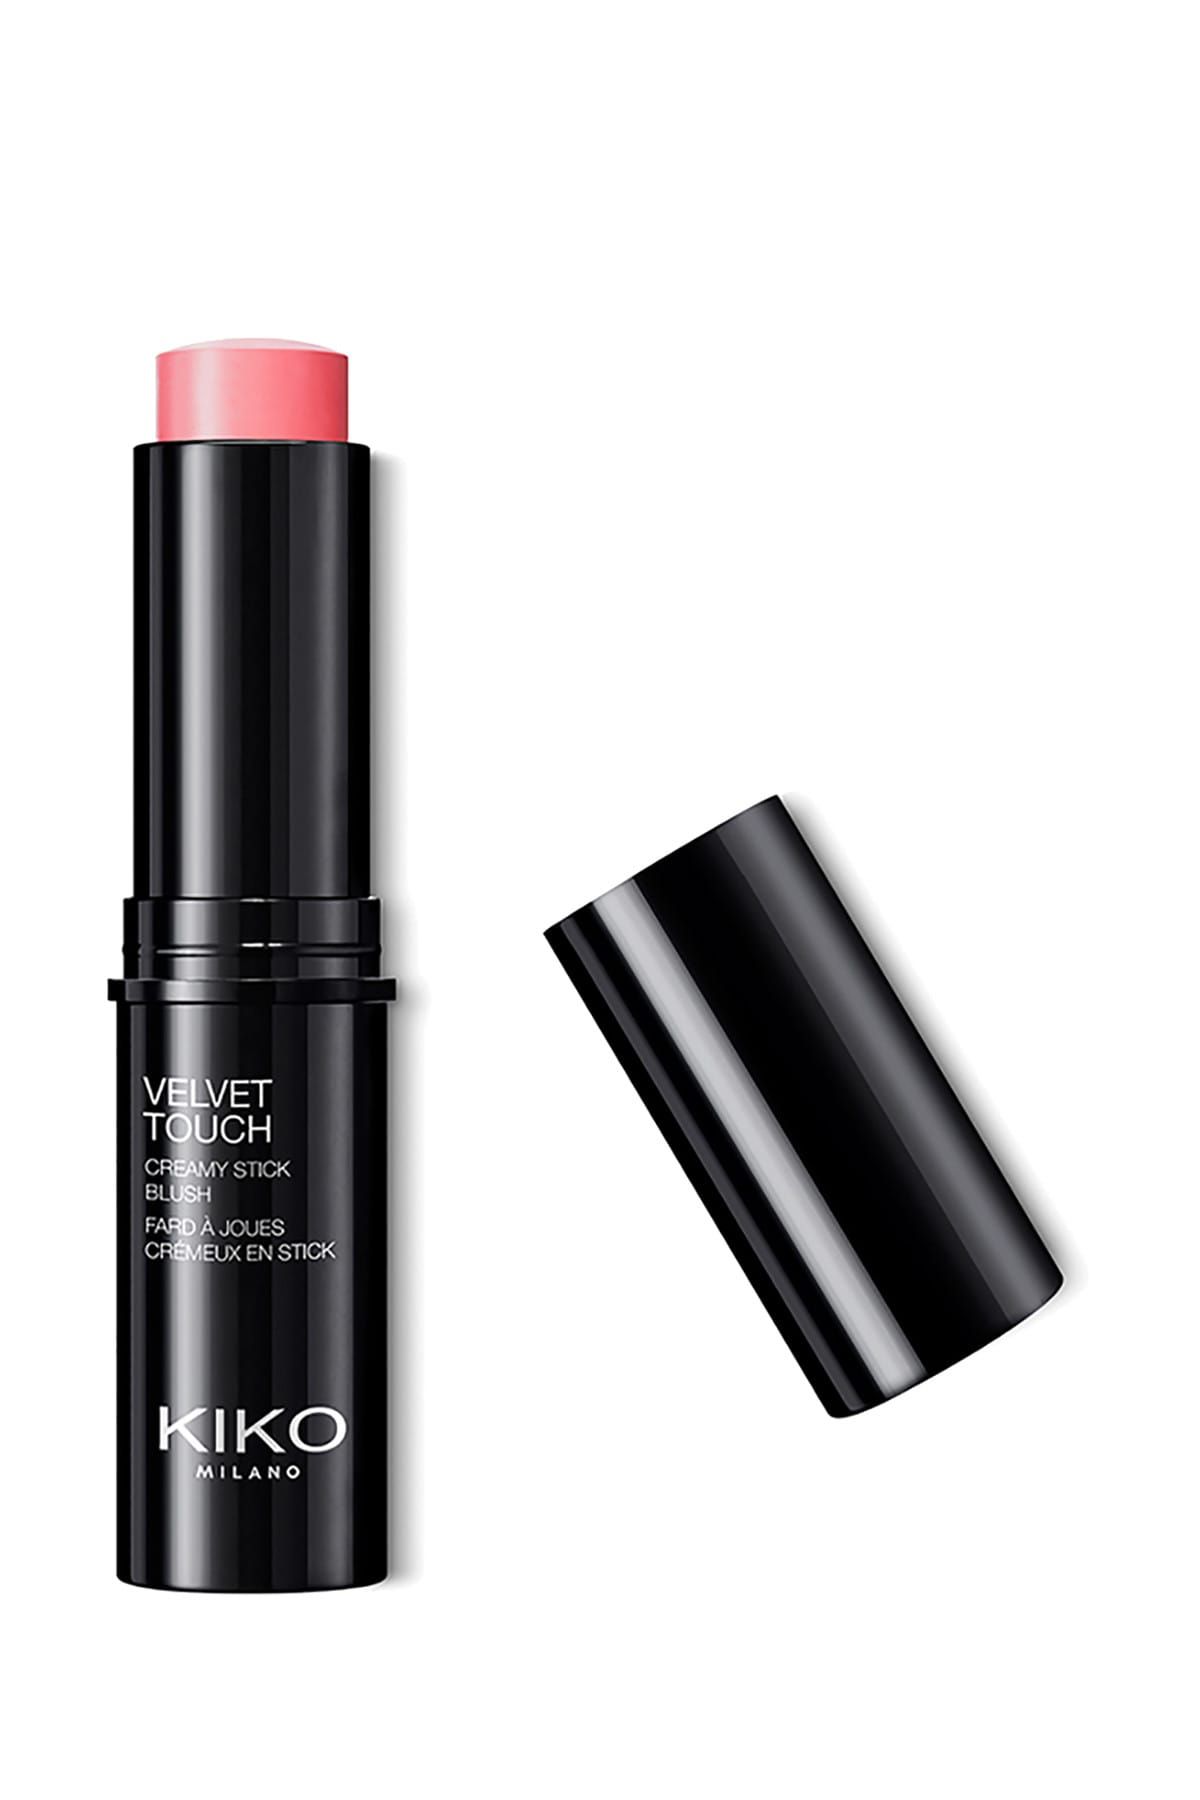 KIKO Stick Allık - Velvet Touch Creamy Stick Blush 05 Camelia Red 10 g 8025272604949